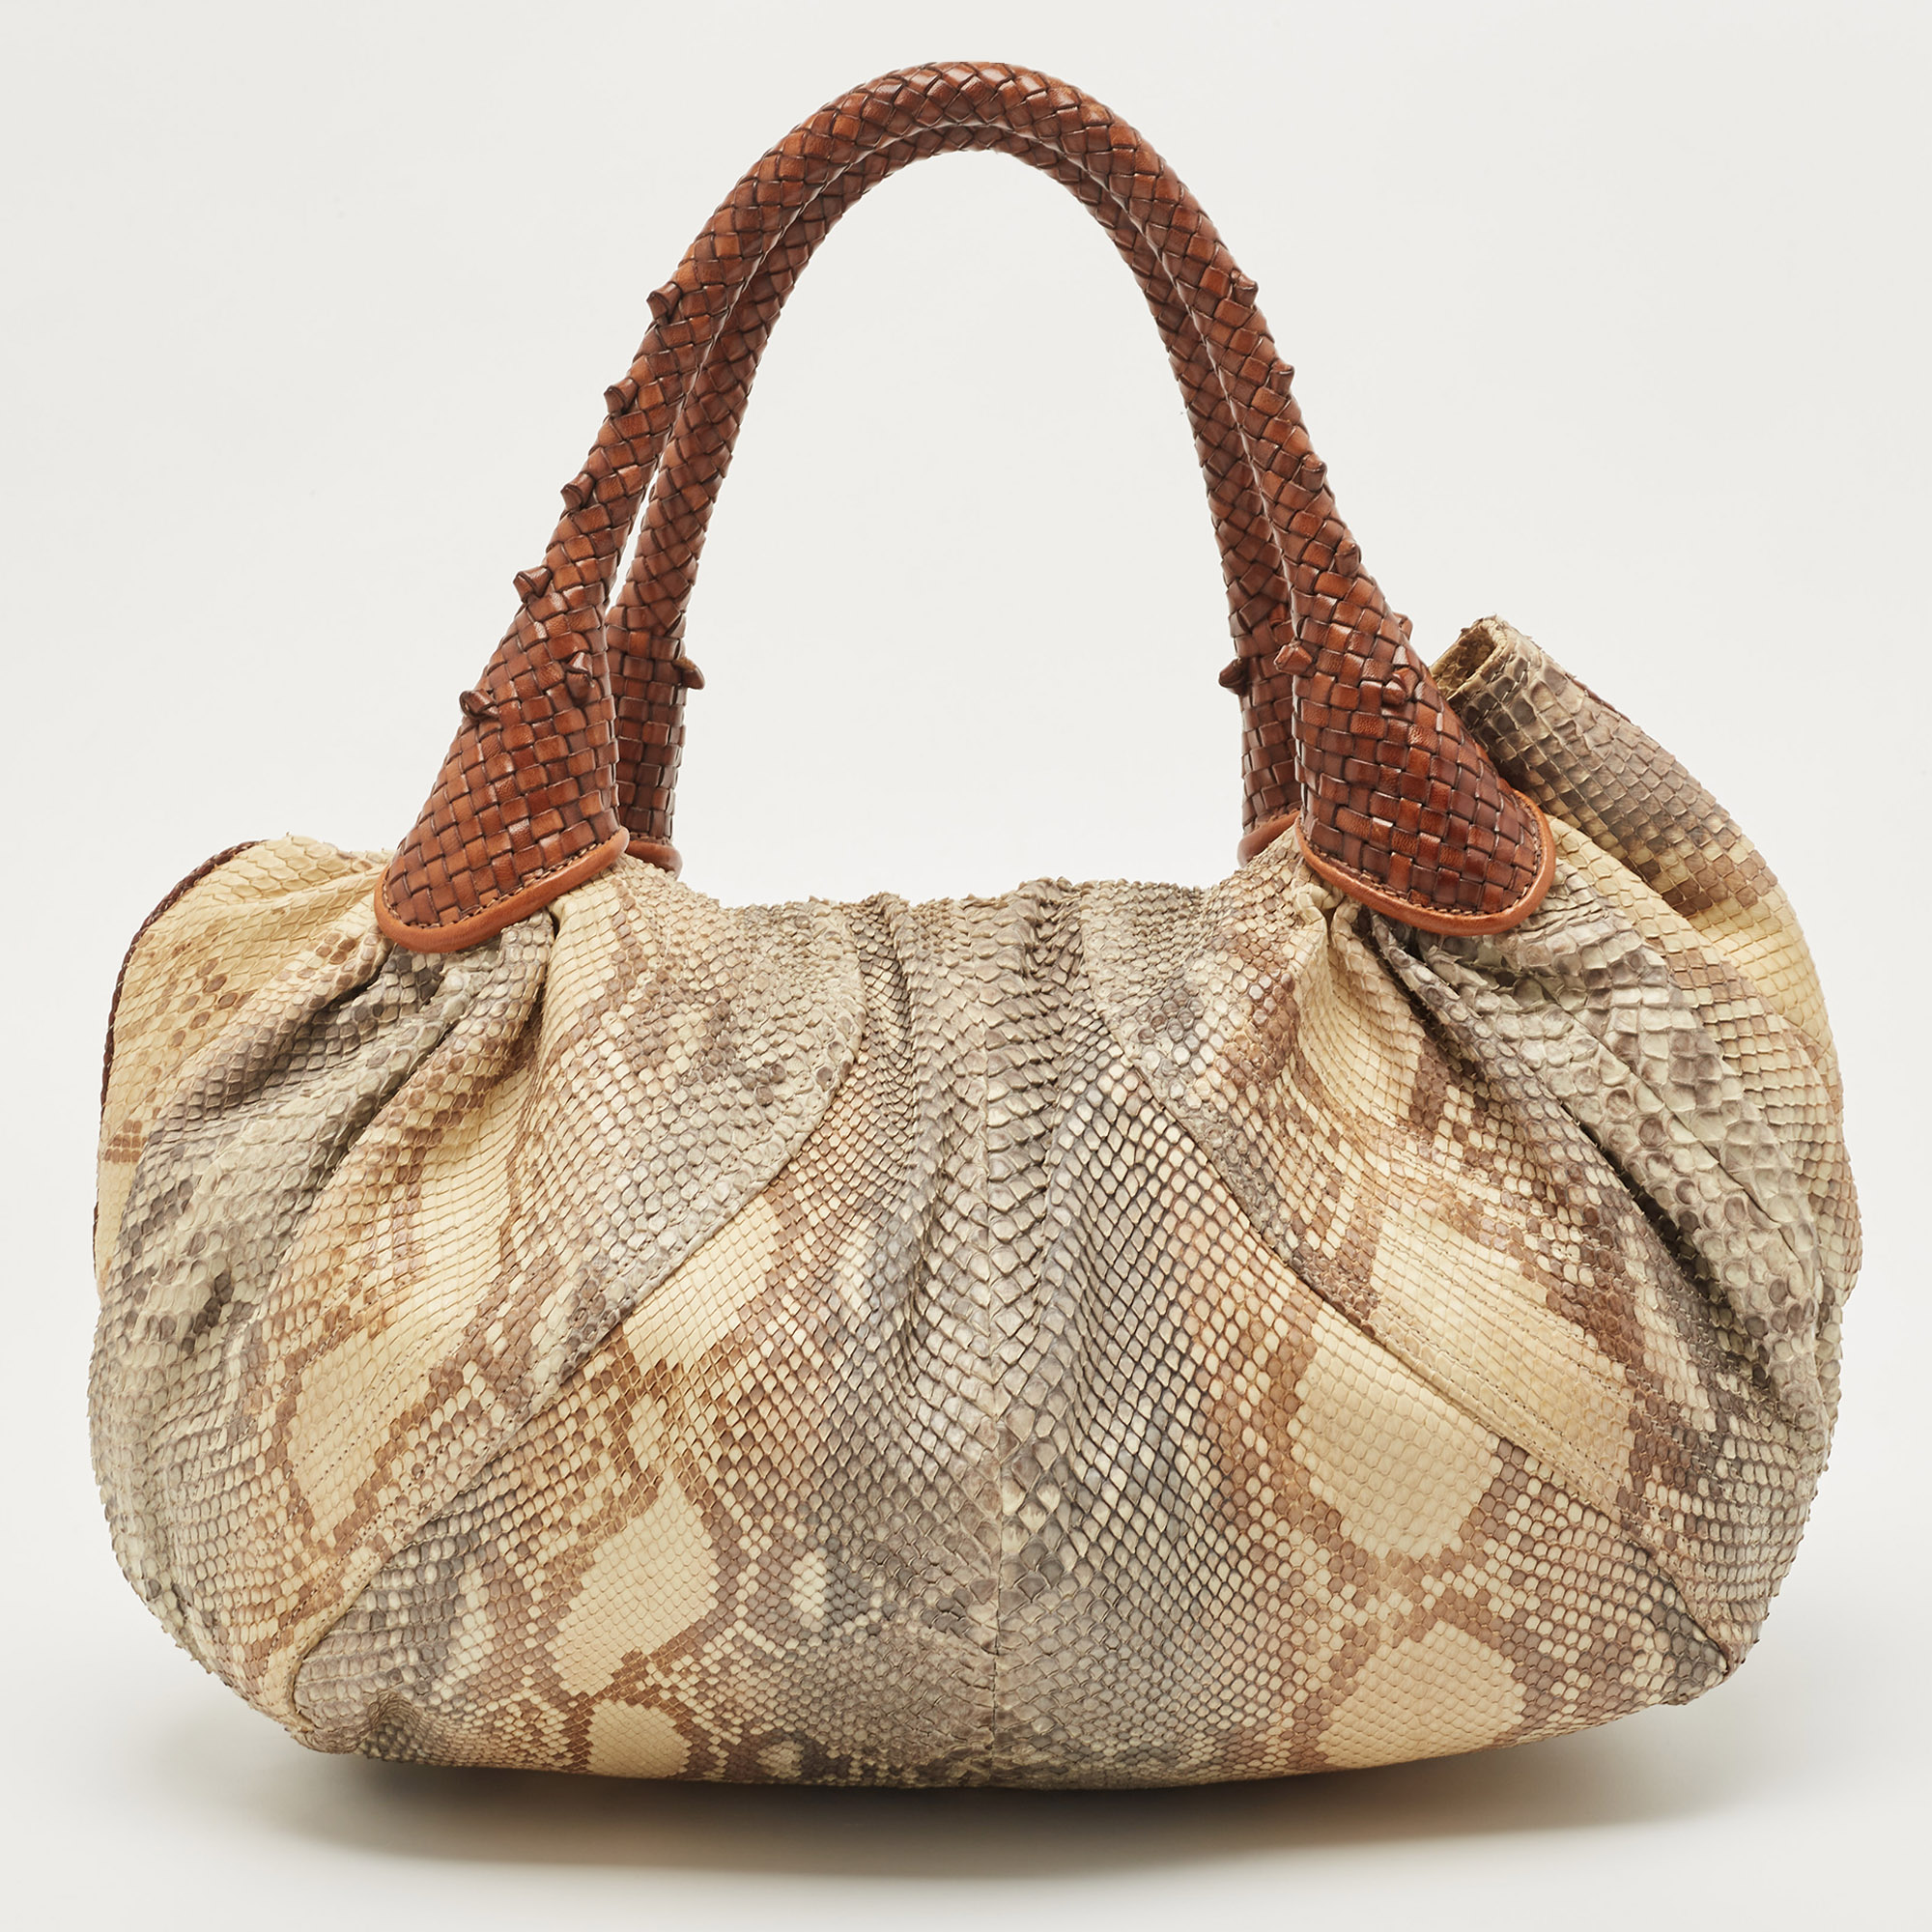 Fendi Brown/Multicolor Python And Leather Spy Bag